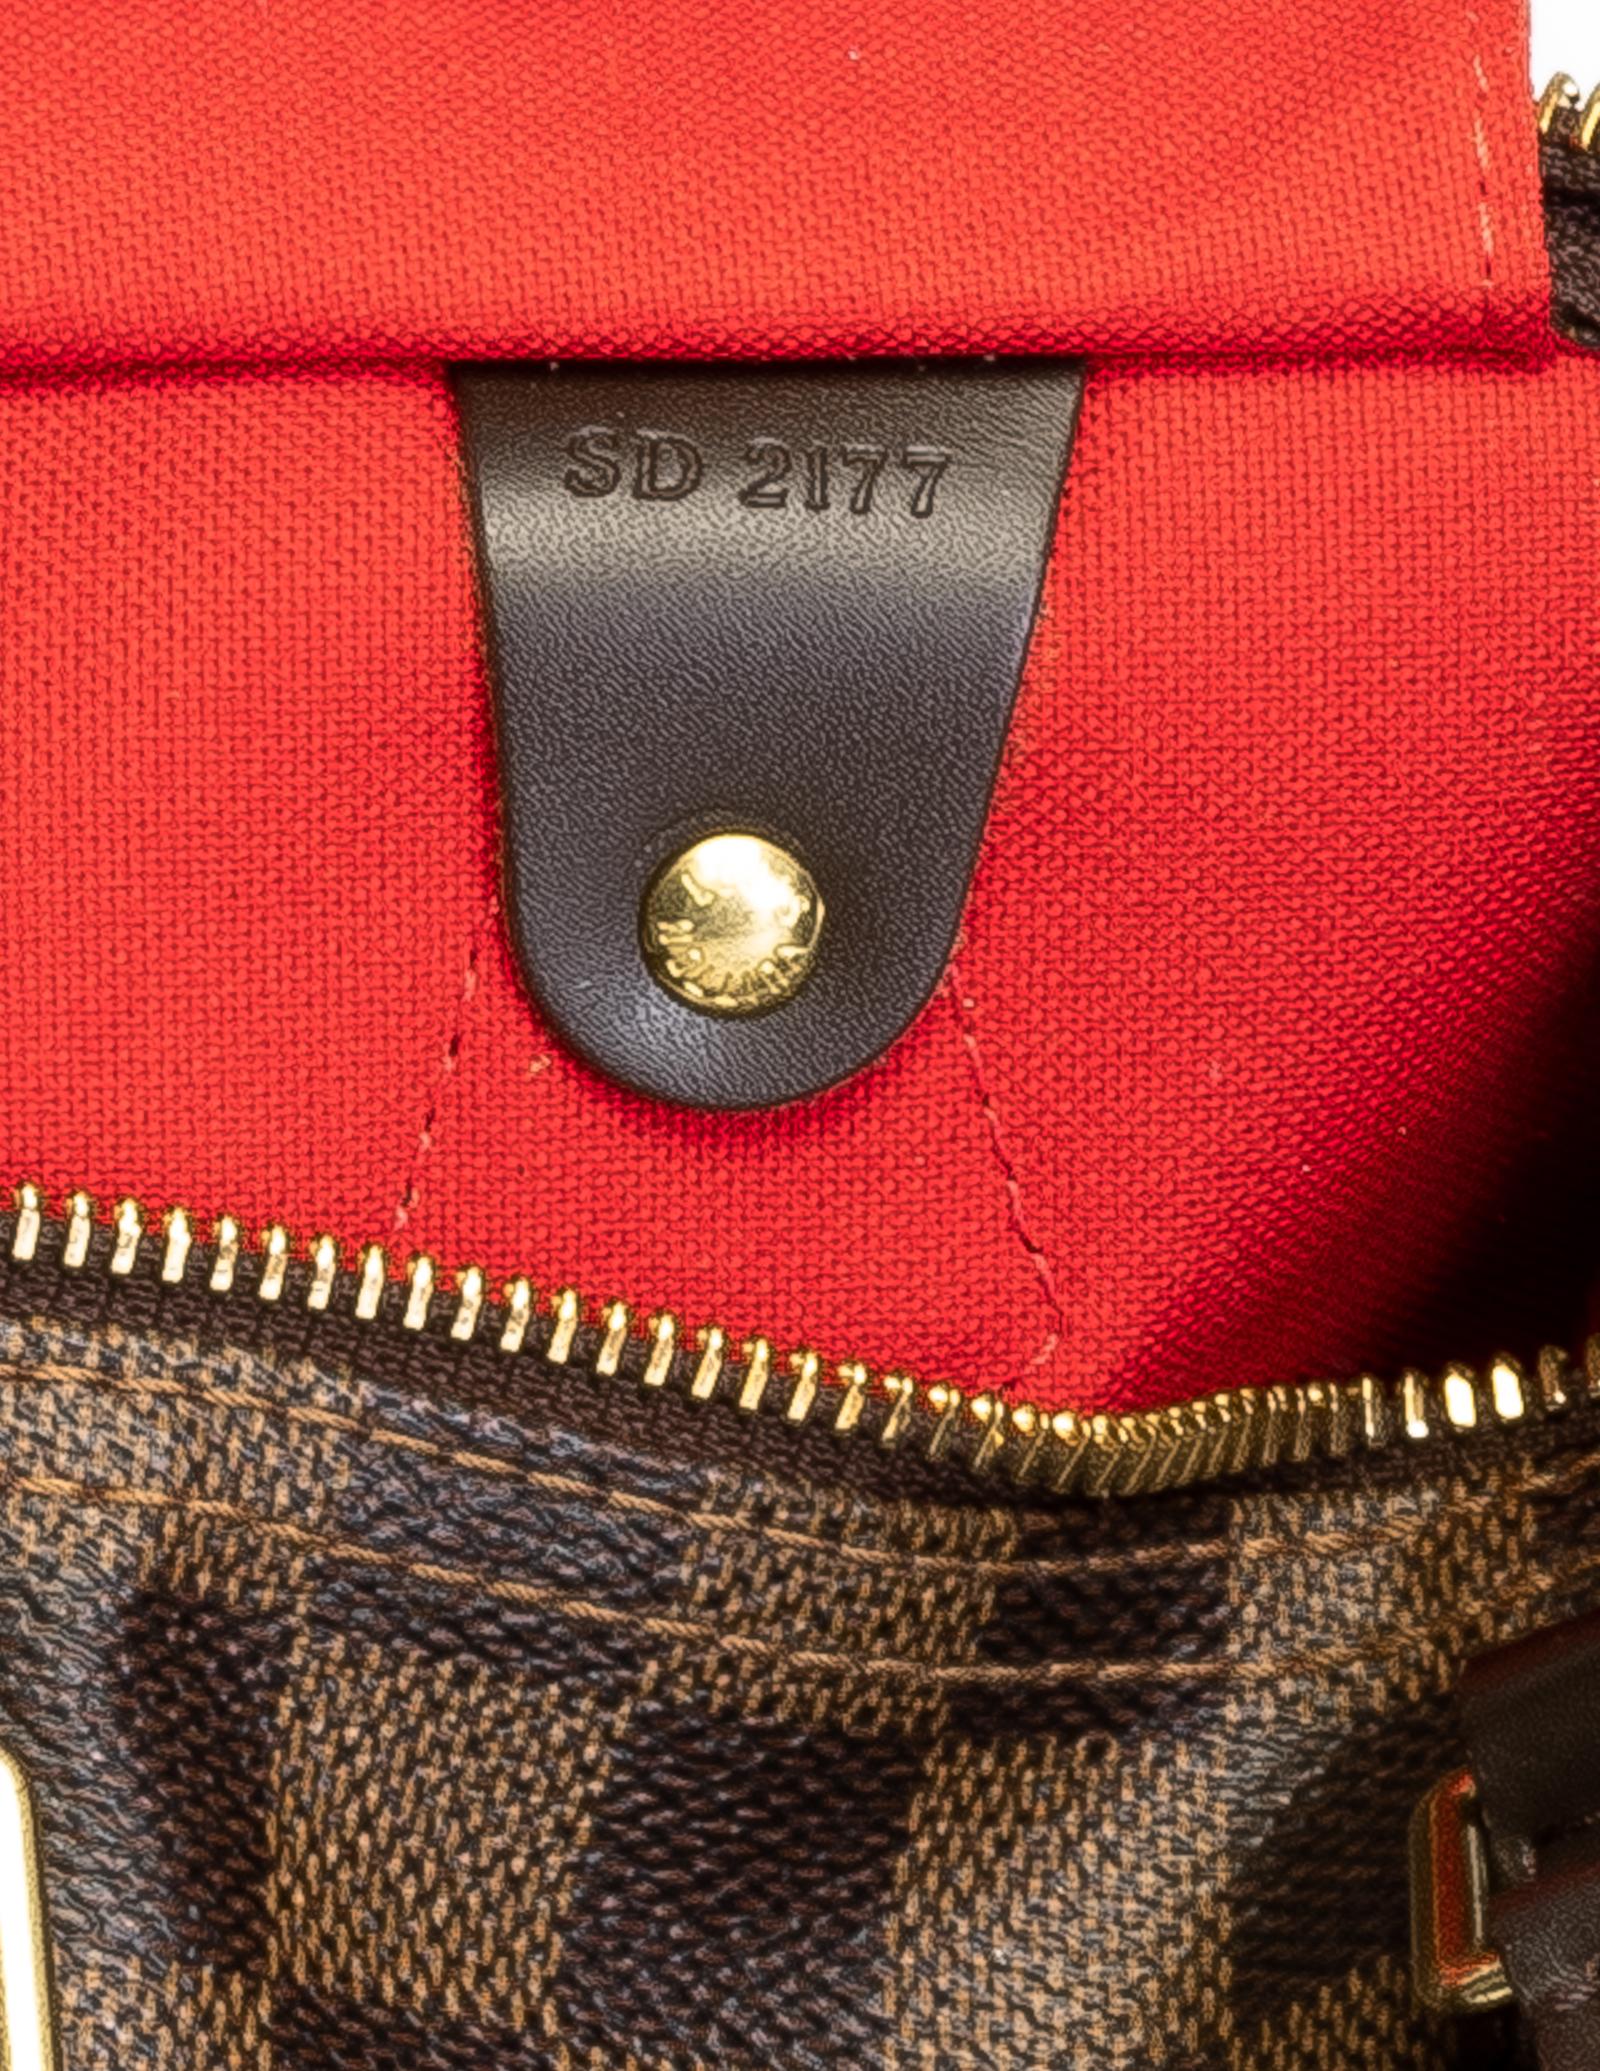 Black Louis Vuitton Damier Ebene Speedy 25 handbag